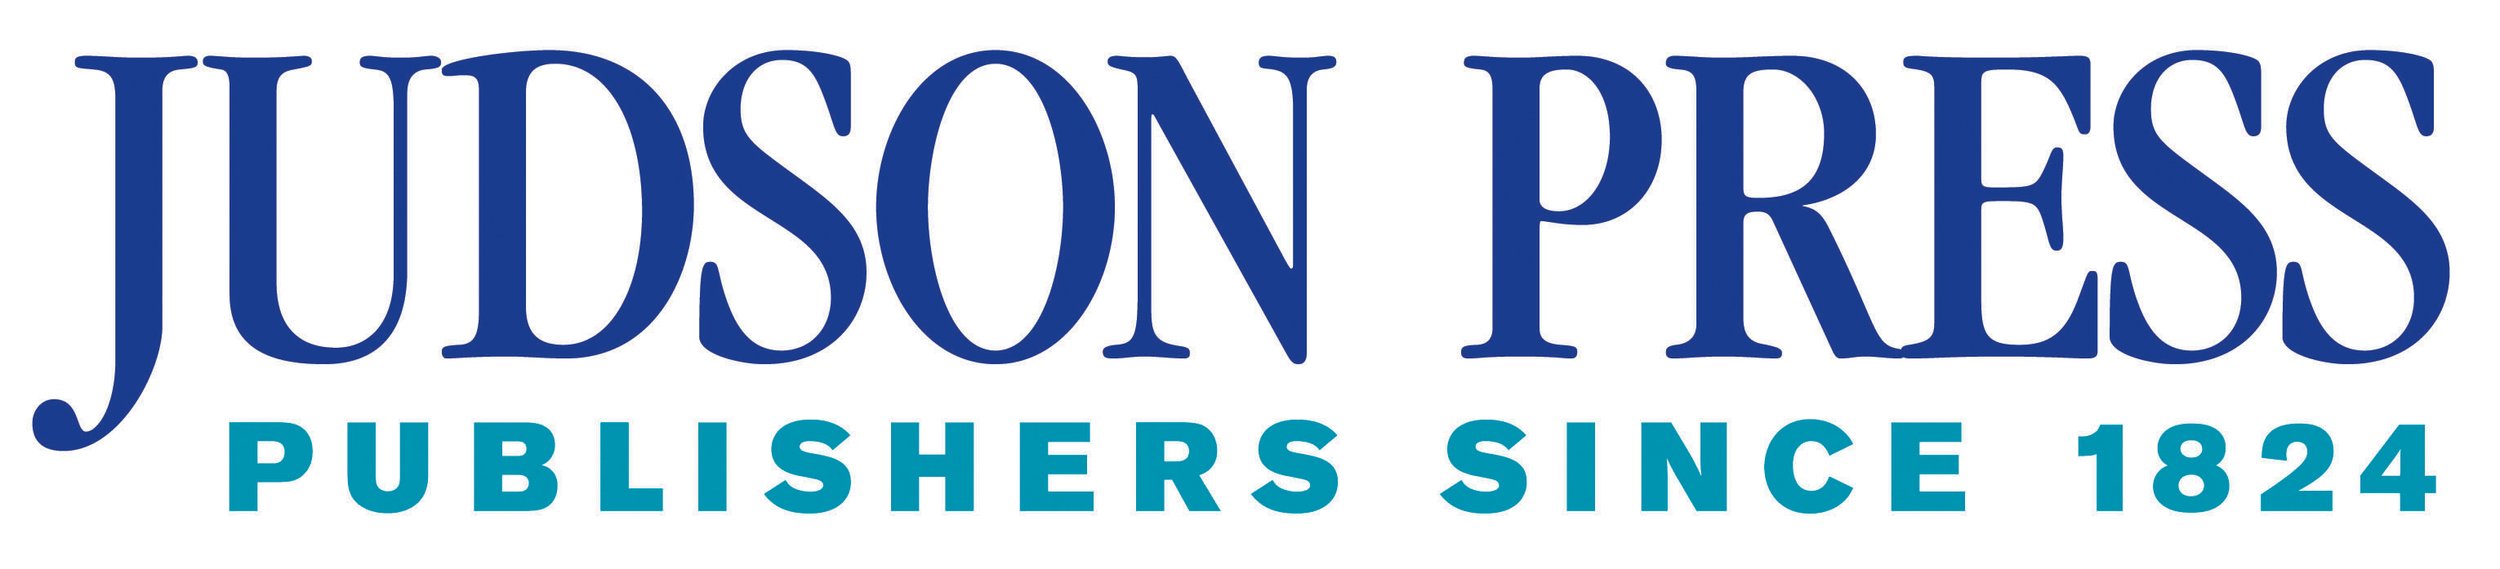 Judson Press logo.jpg